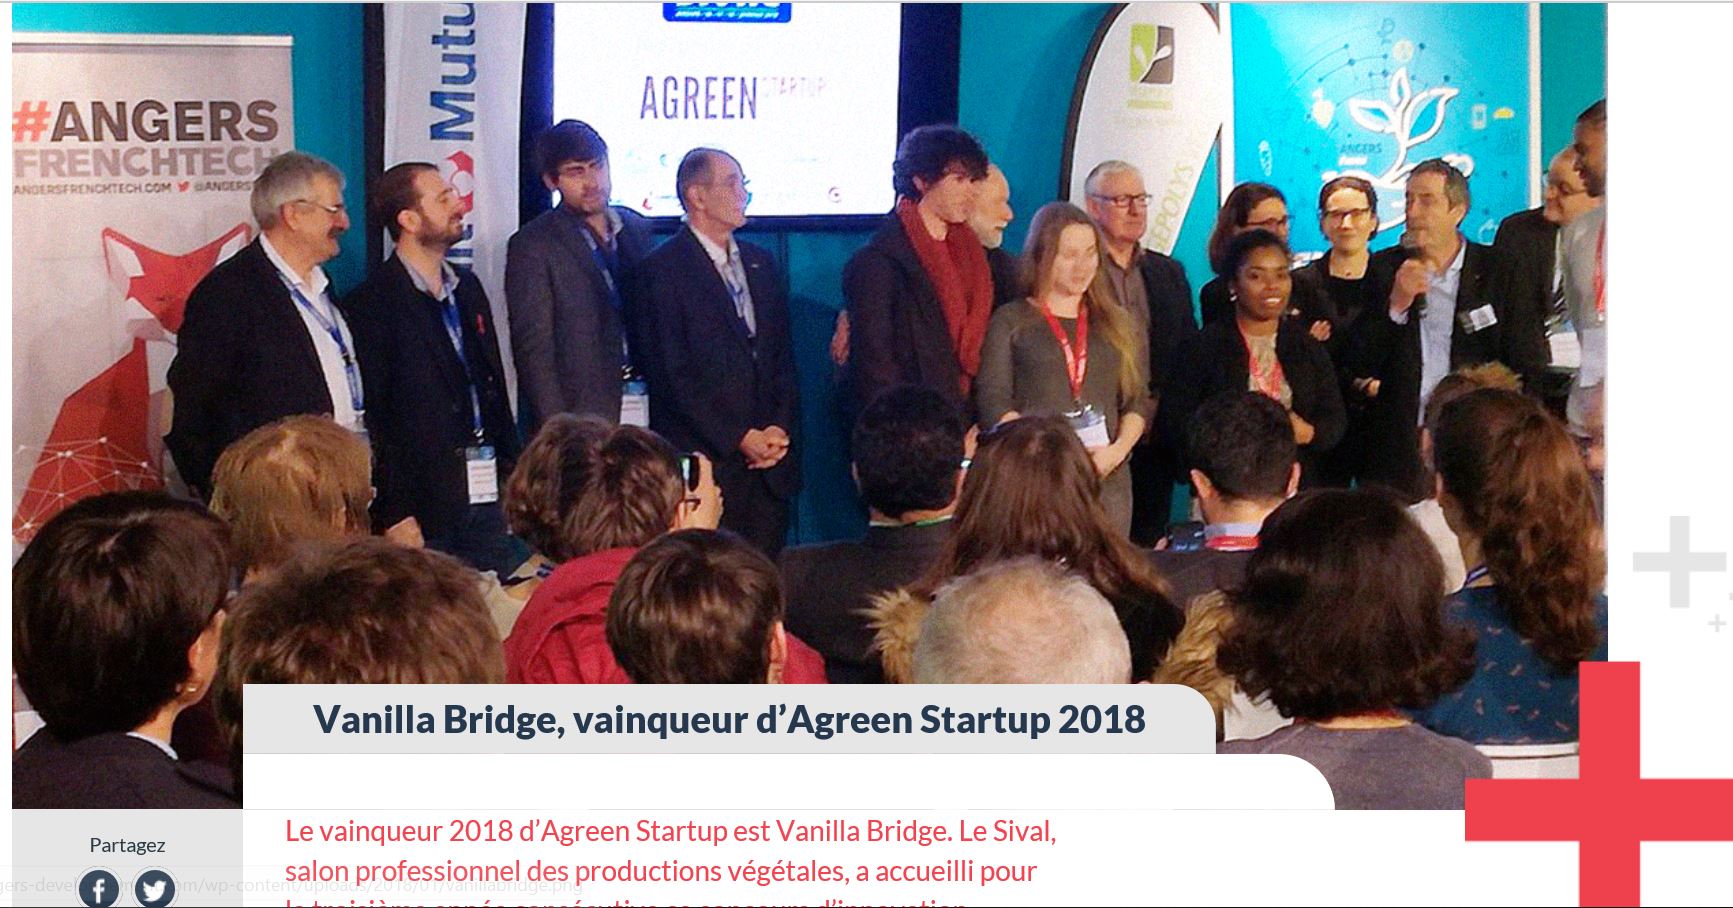 Vanilla Bridge, vainqueur d’Agreen Startup 2018